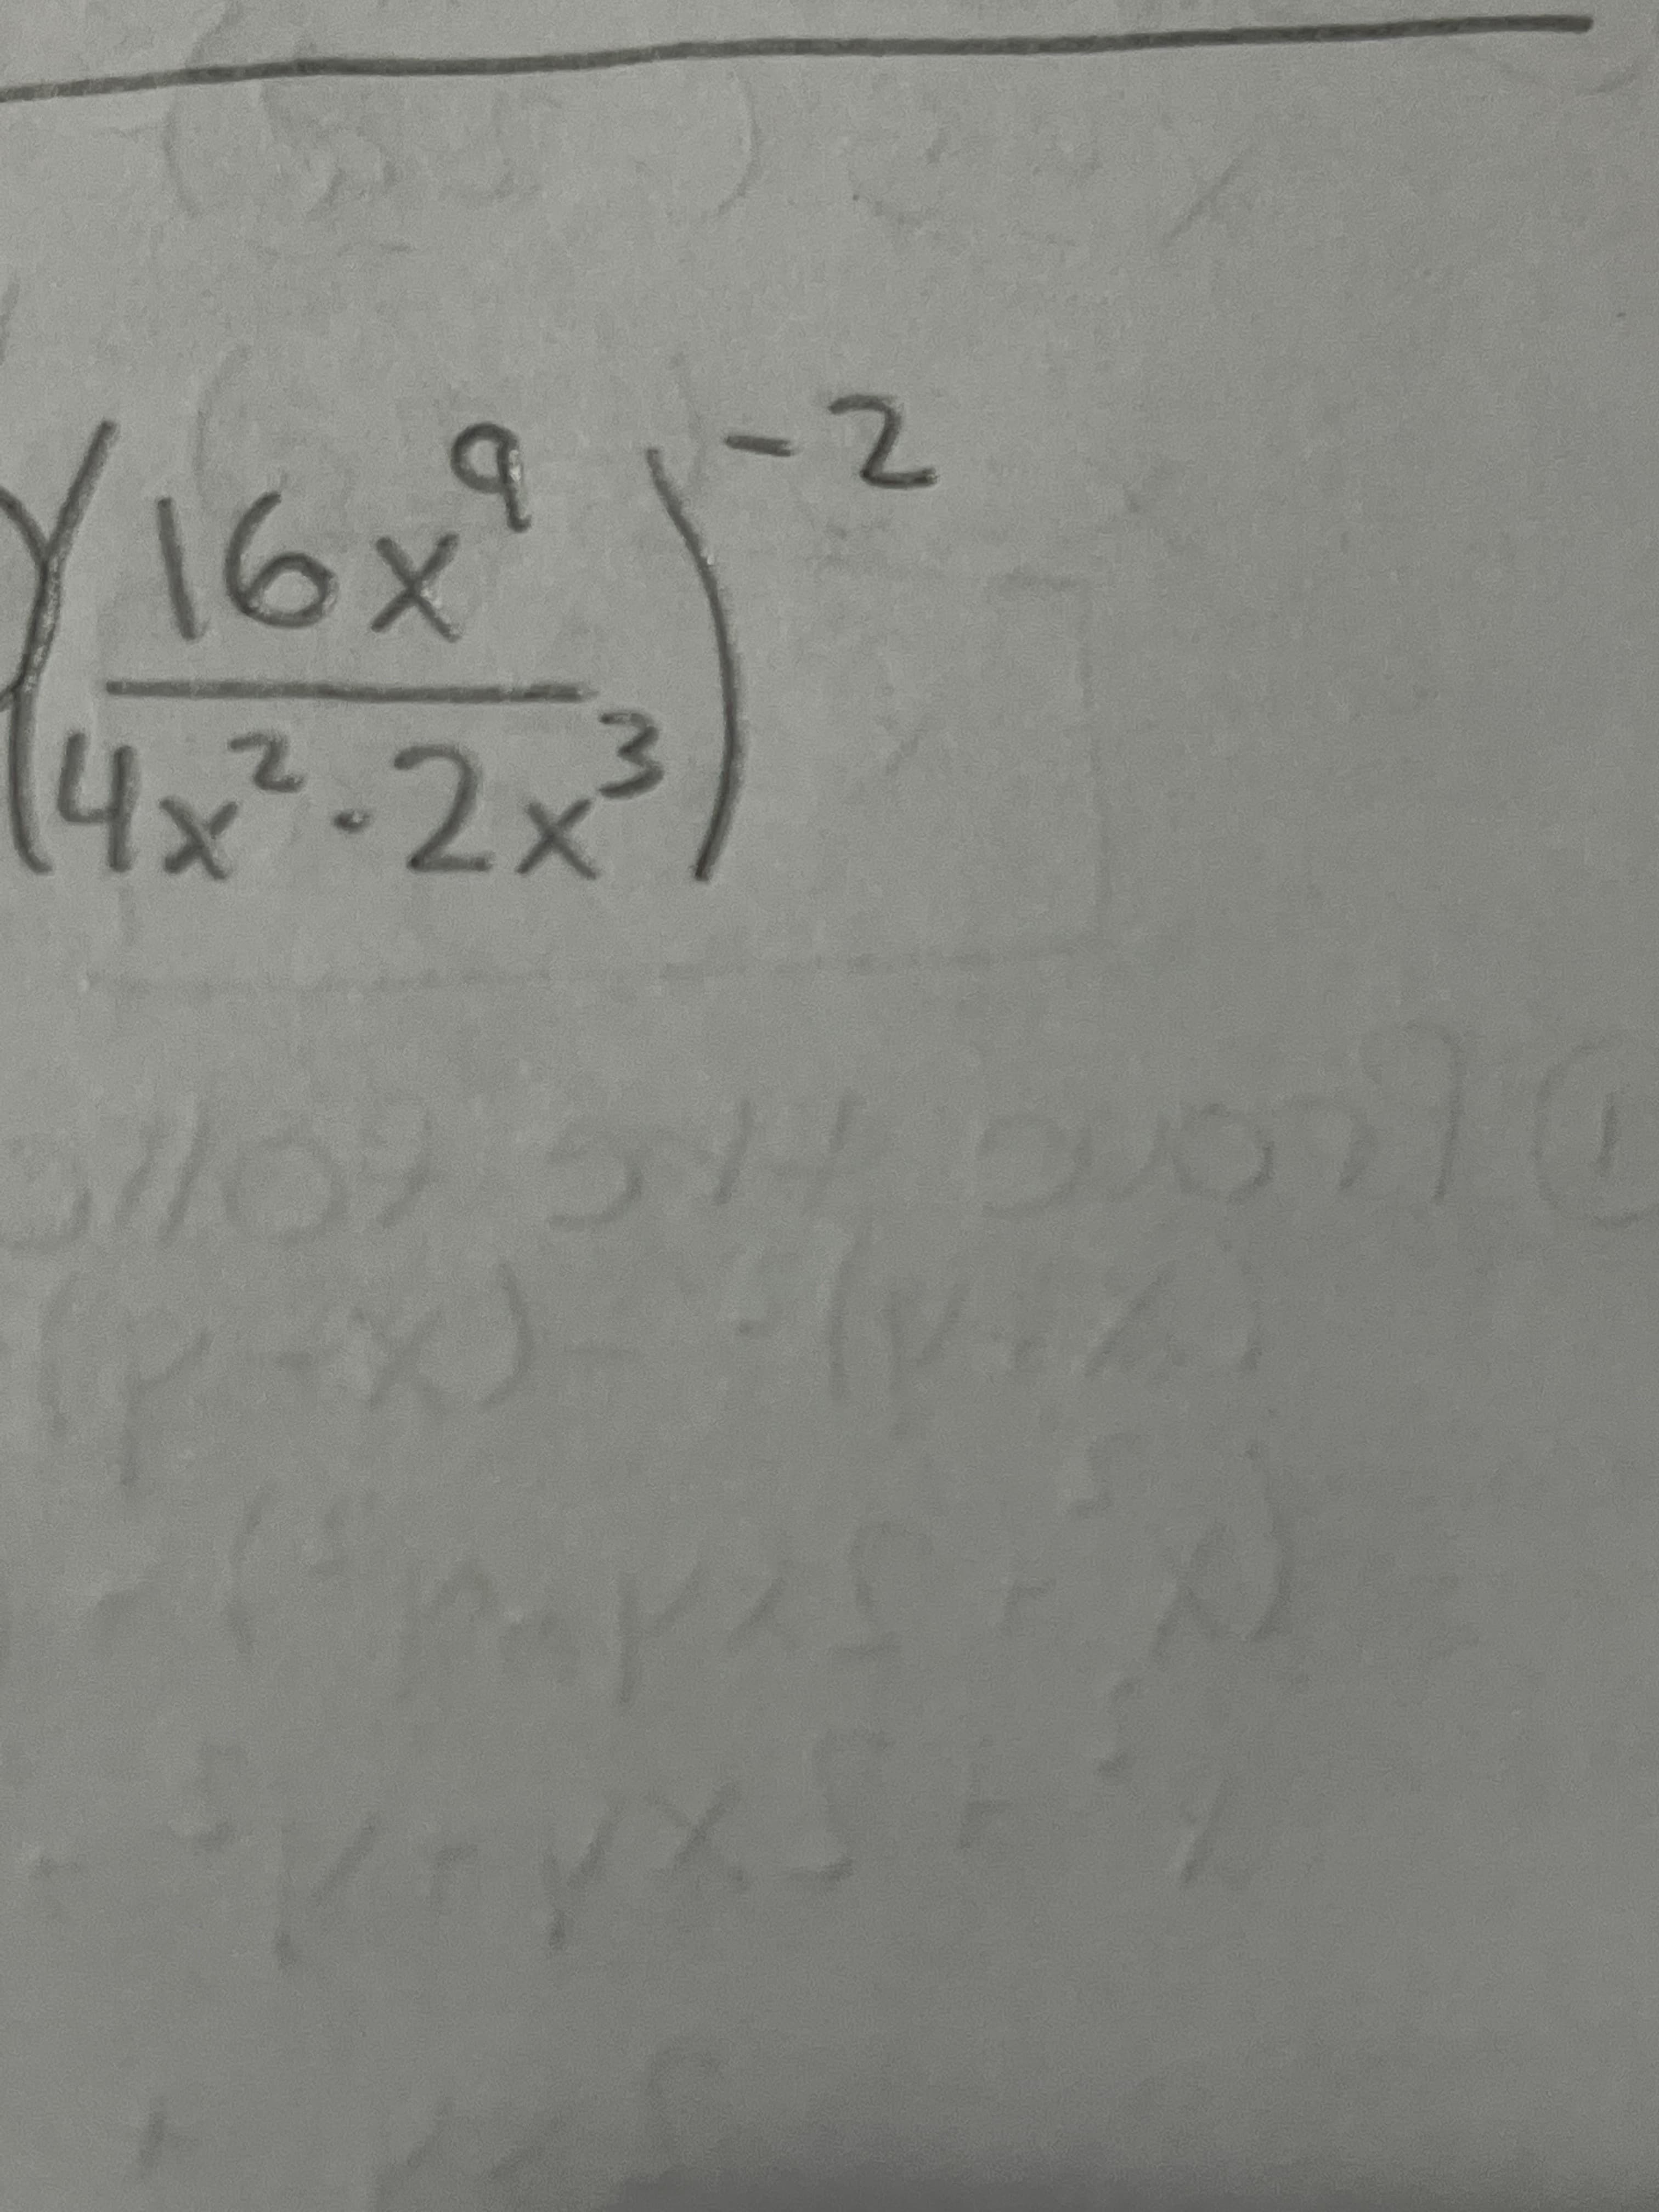 4x²-2x²,
2.
